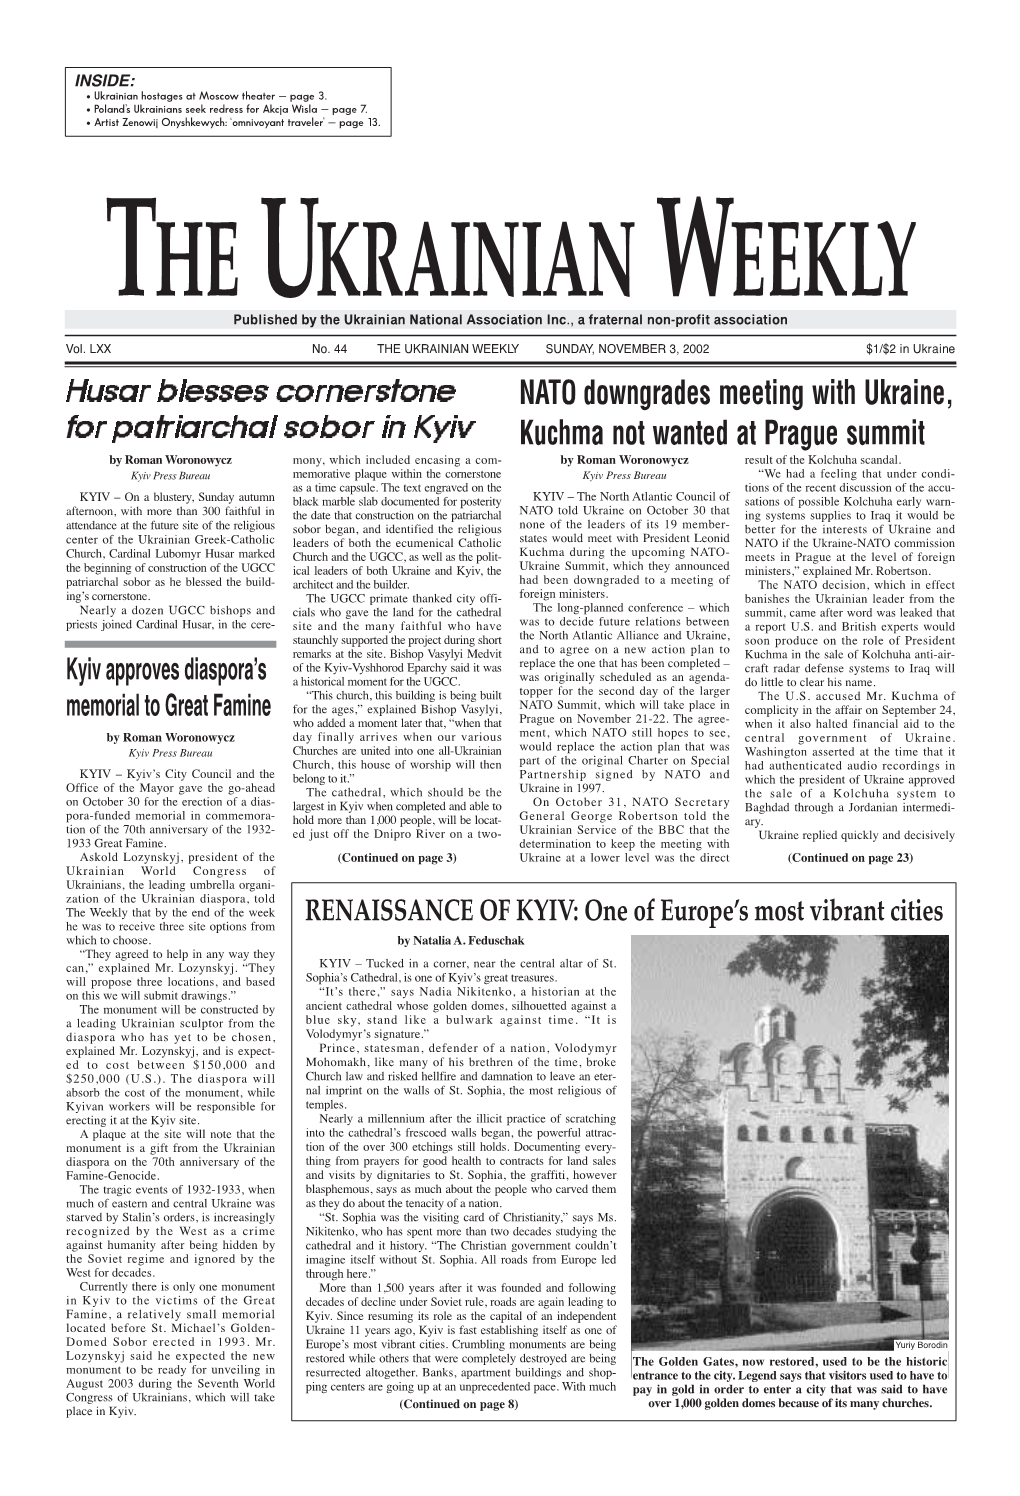 The Ukrainian Weekly 2002, No.44